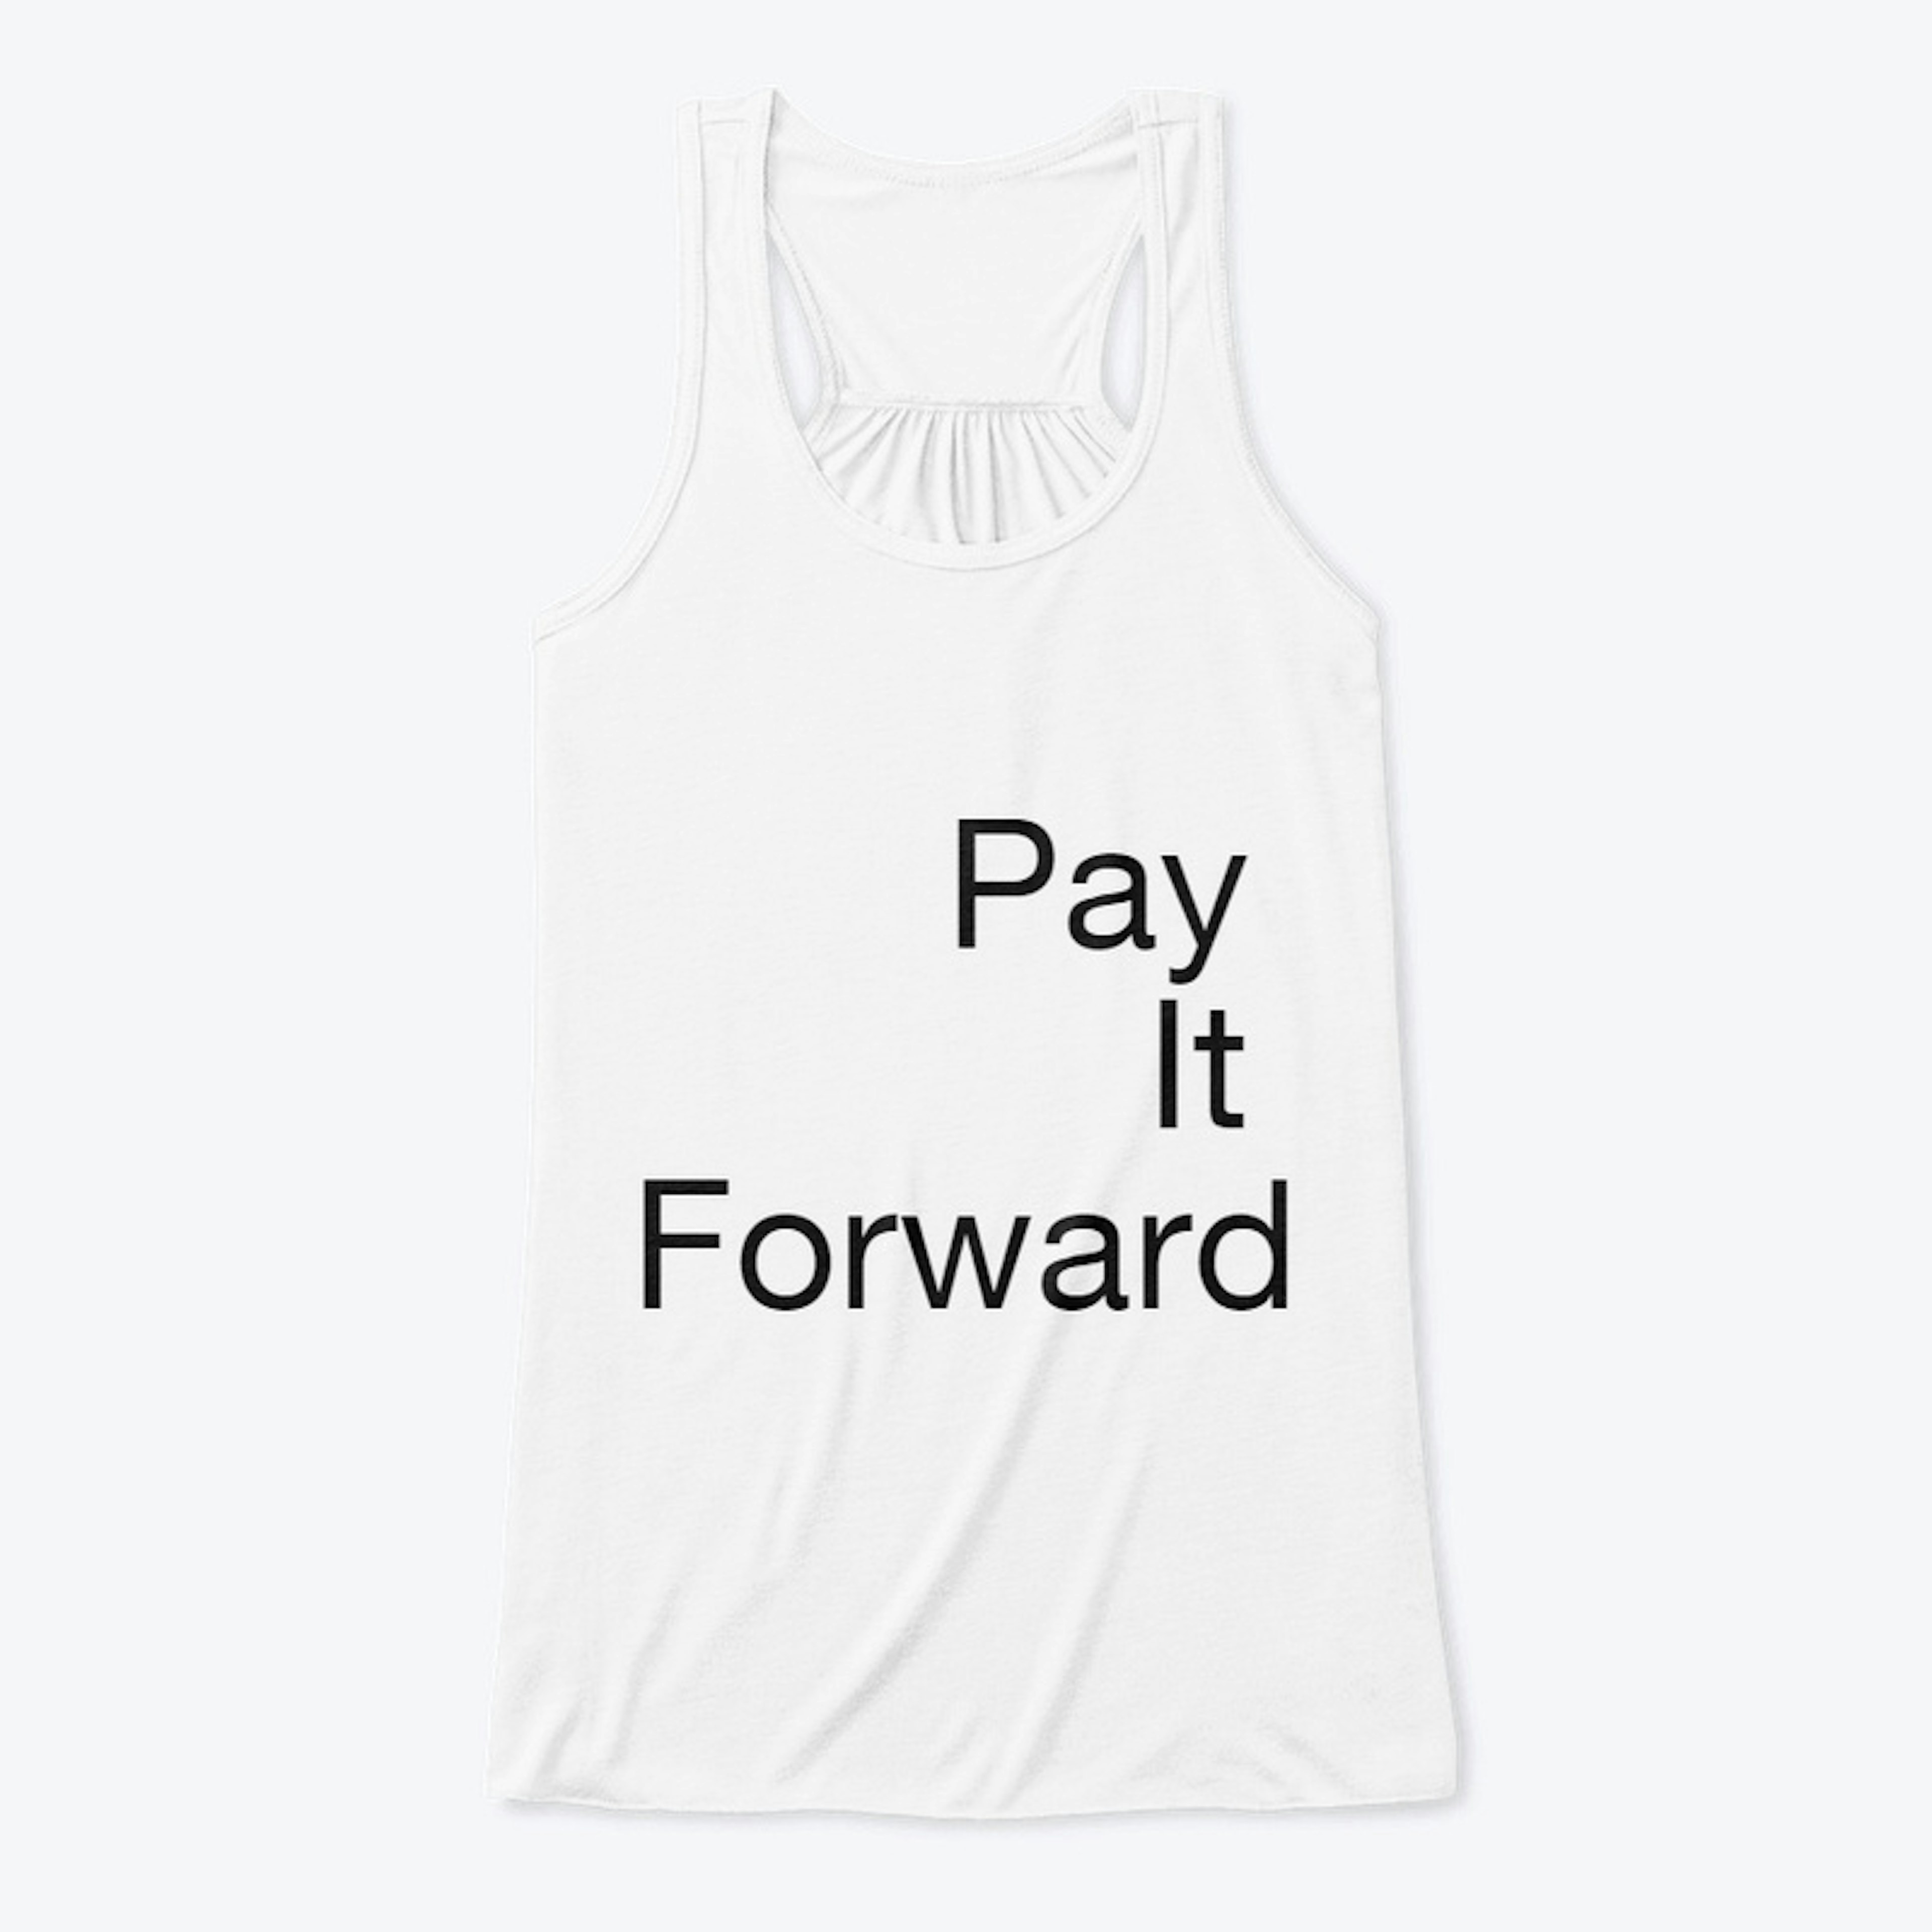 PayDay Foundation